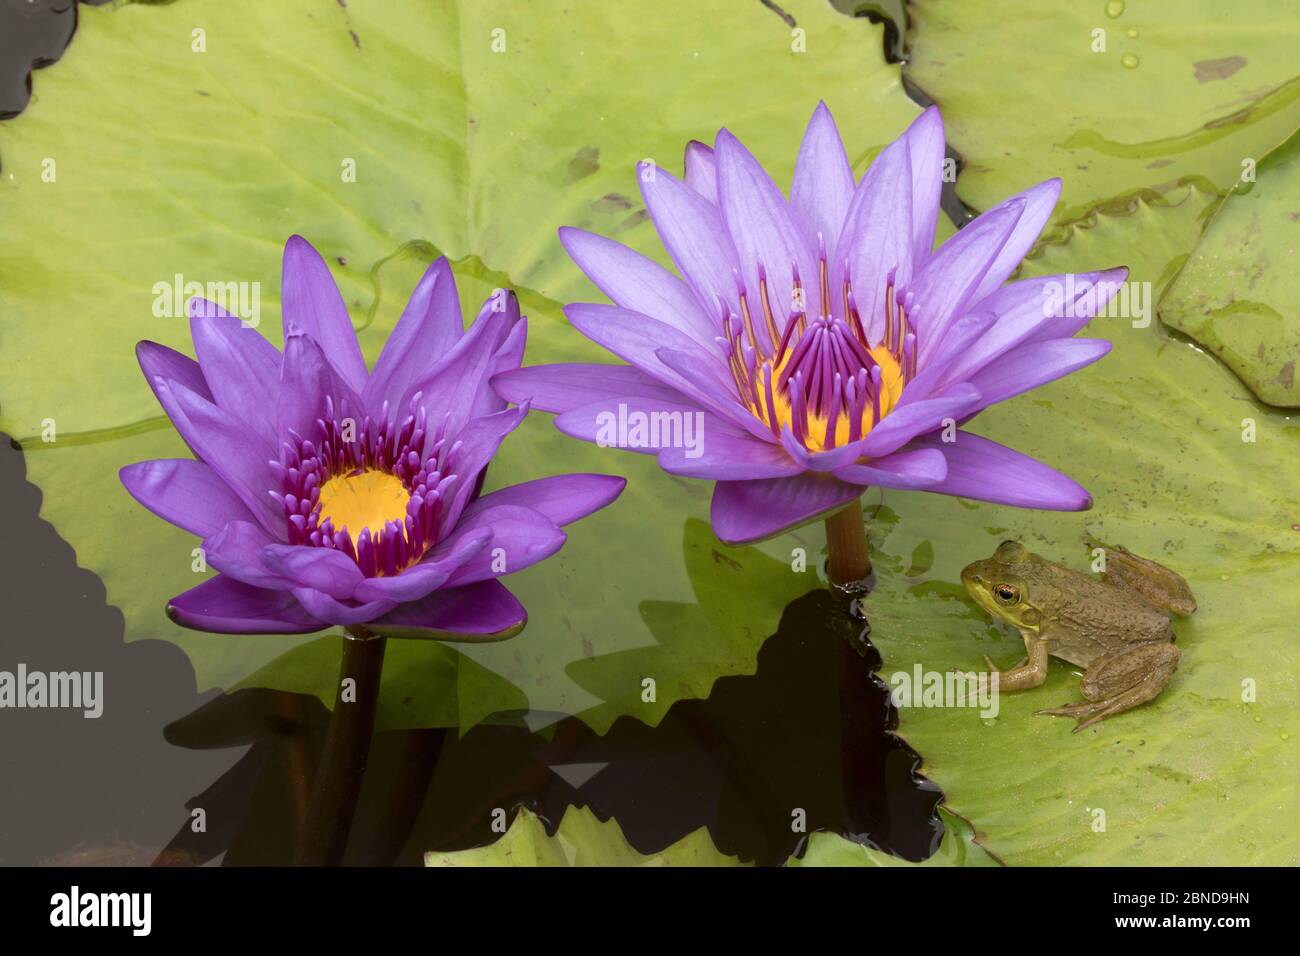 American bullfrog (Lithobates catesbeianus) next to Water lily flowers, Washington DC, USA, July. Stock Photo